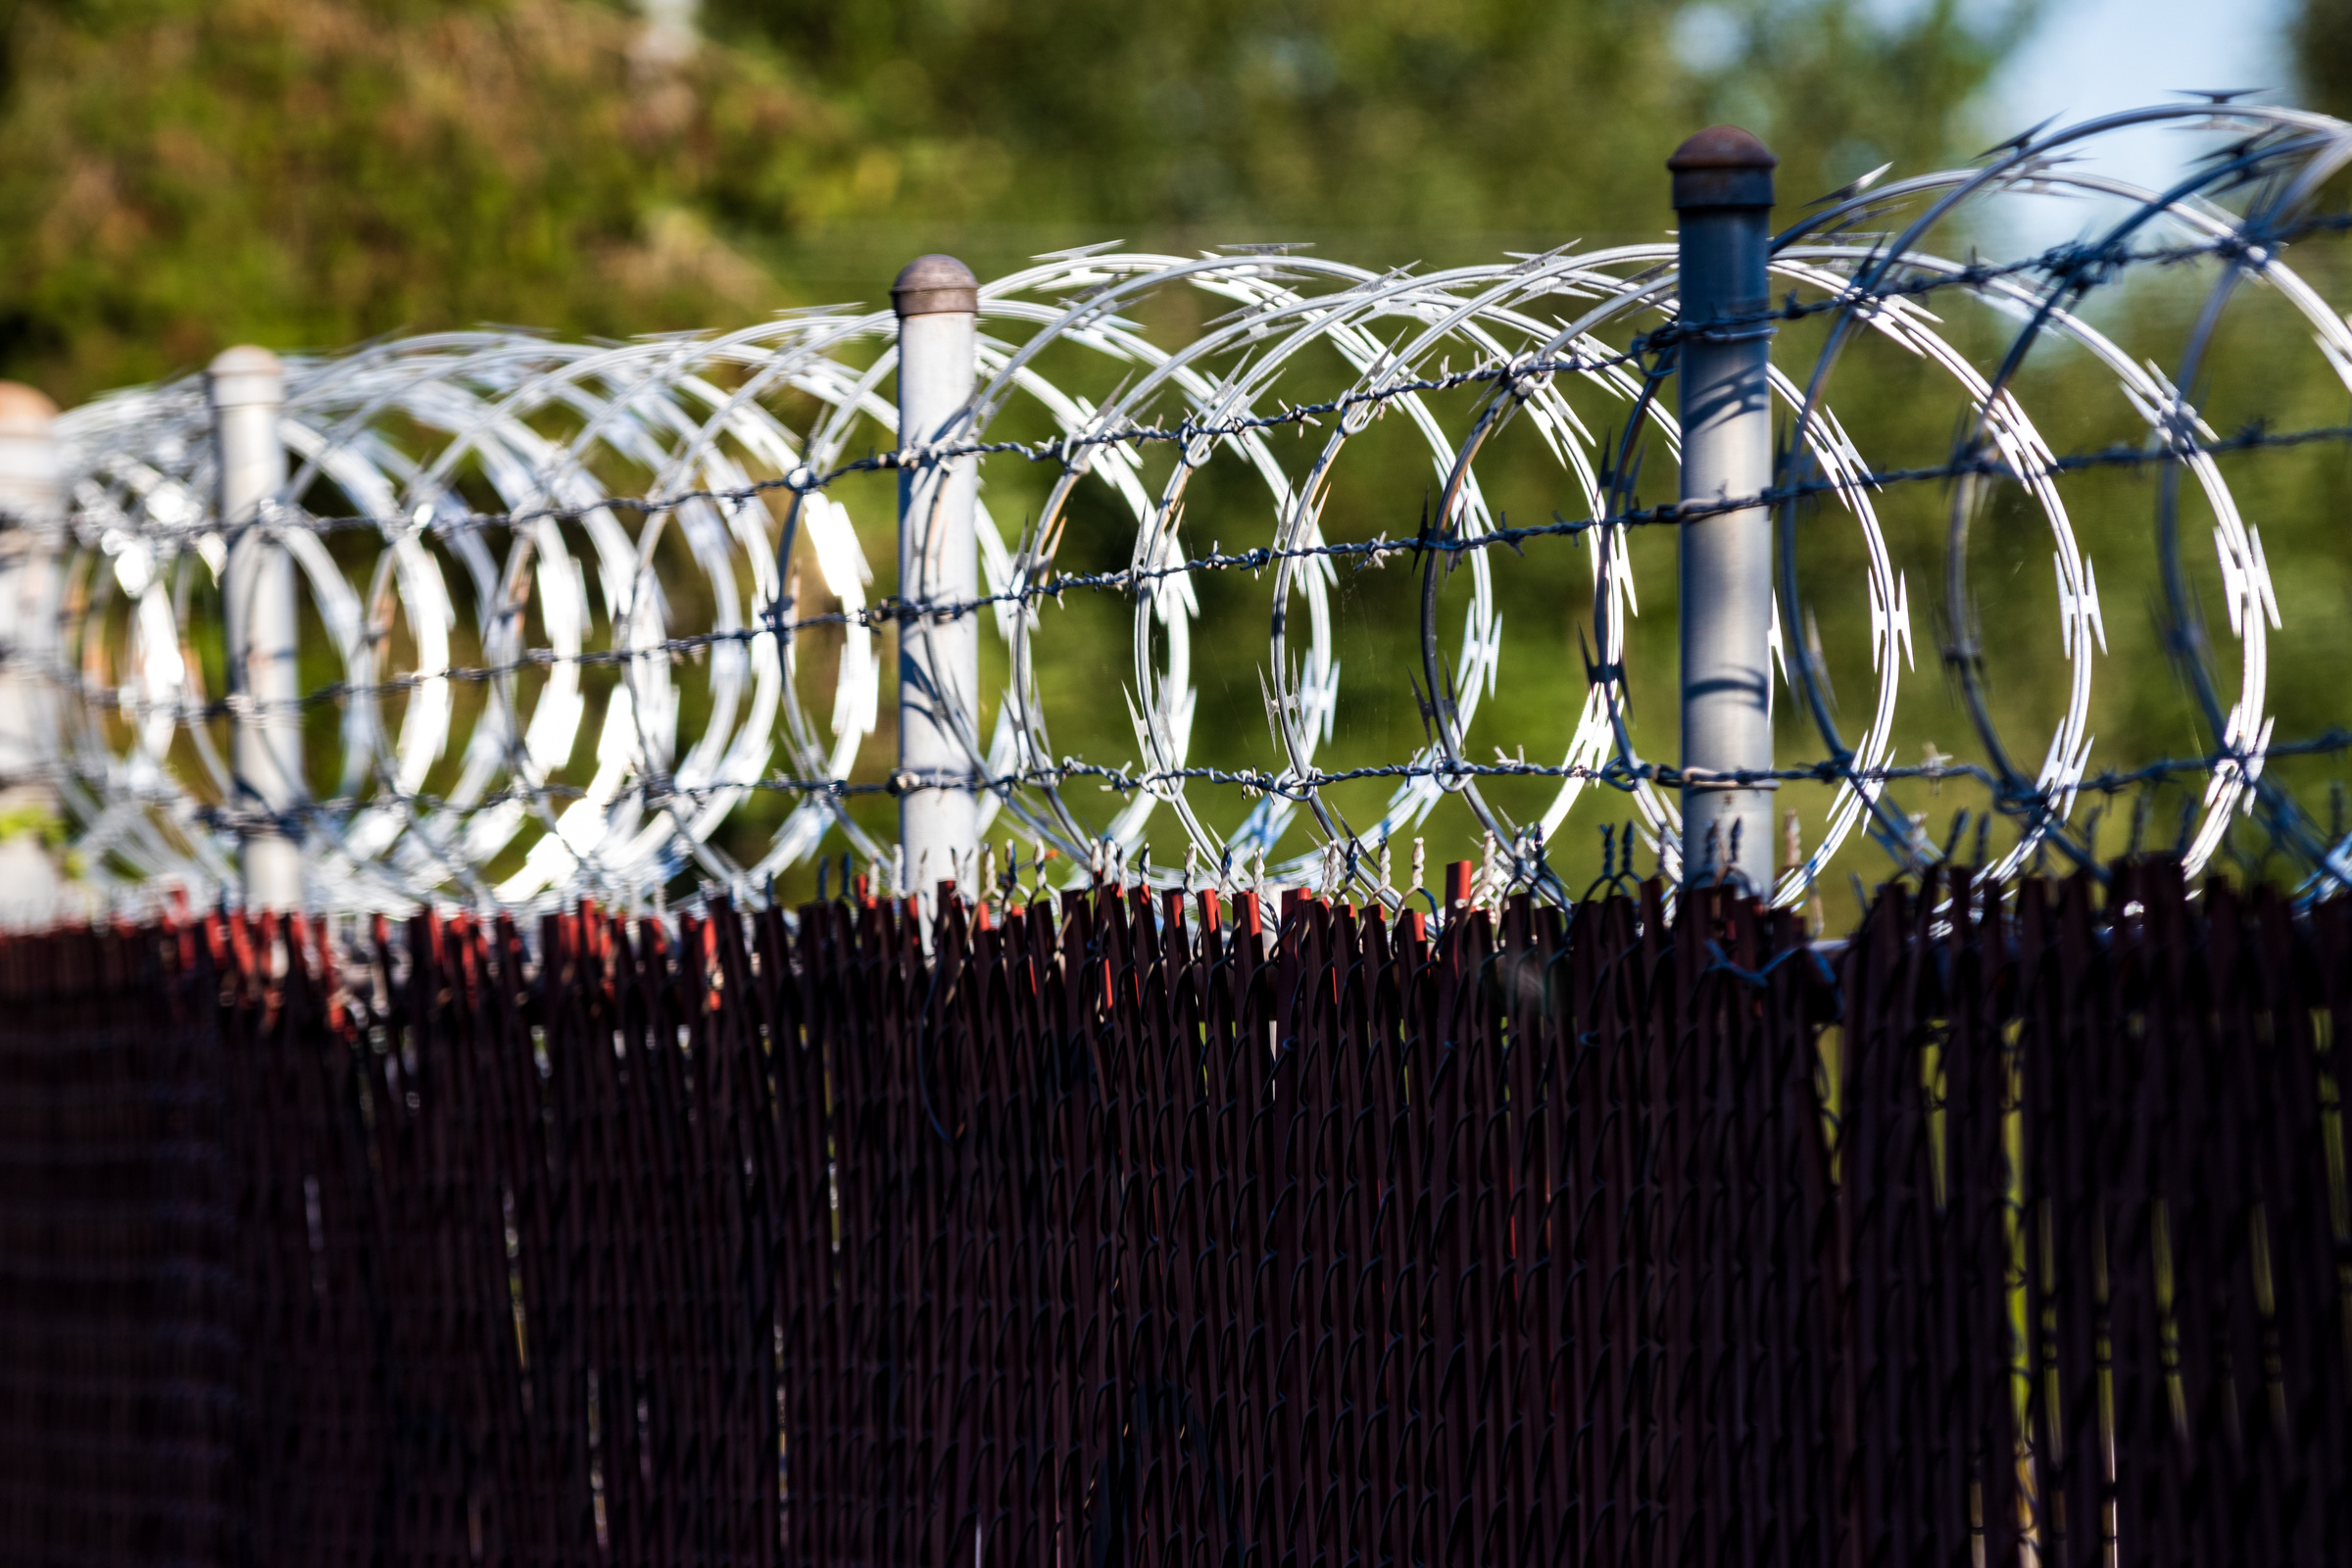 Razor wire fence shining in the sun